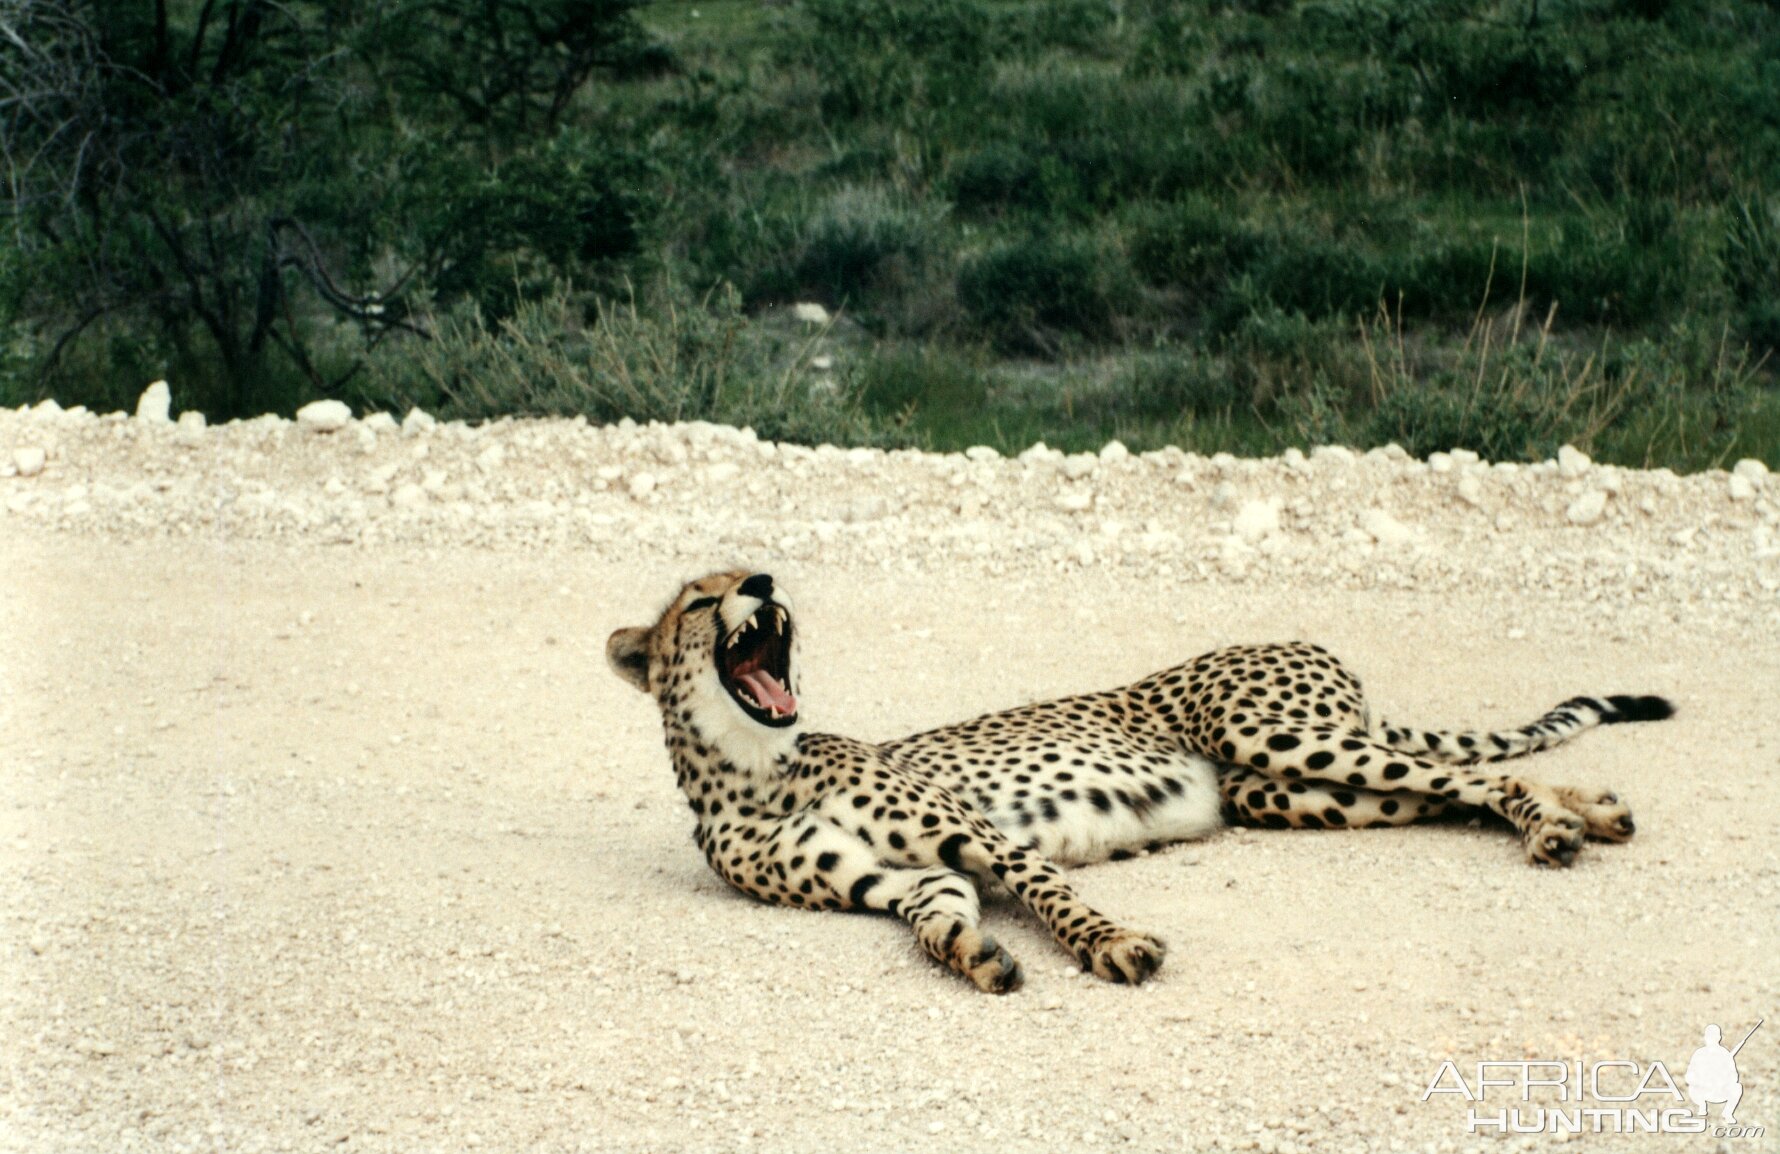 Cheetah at Etosha National Park in Namibia